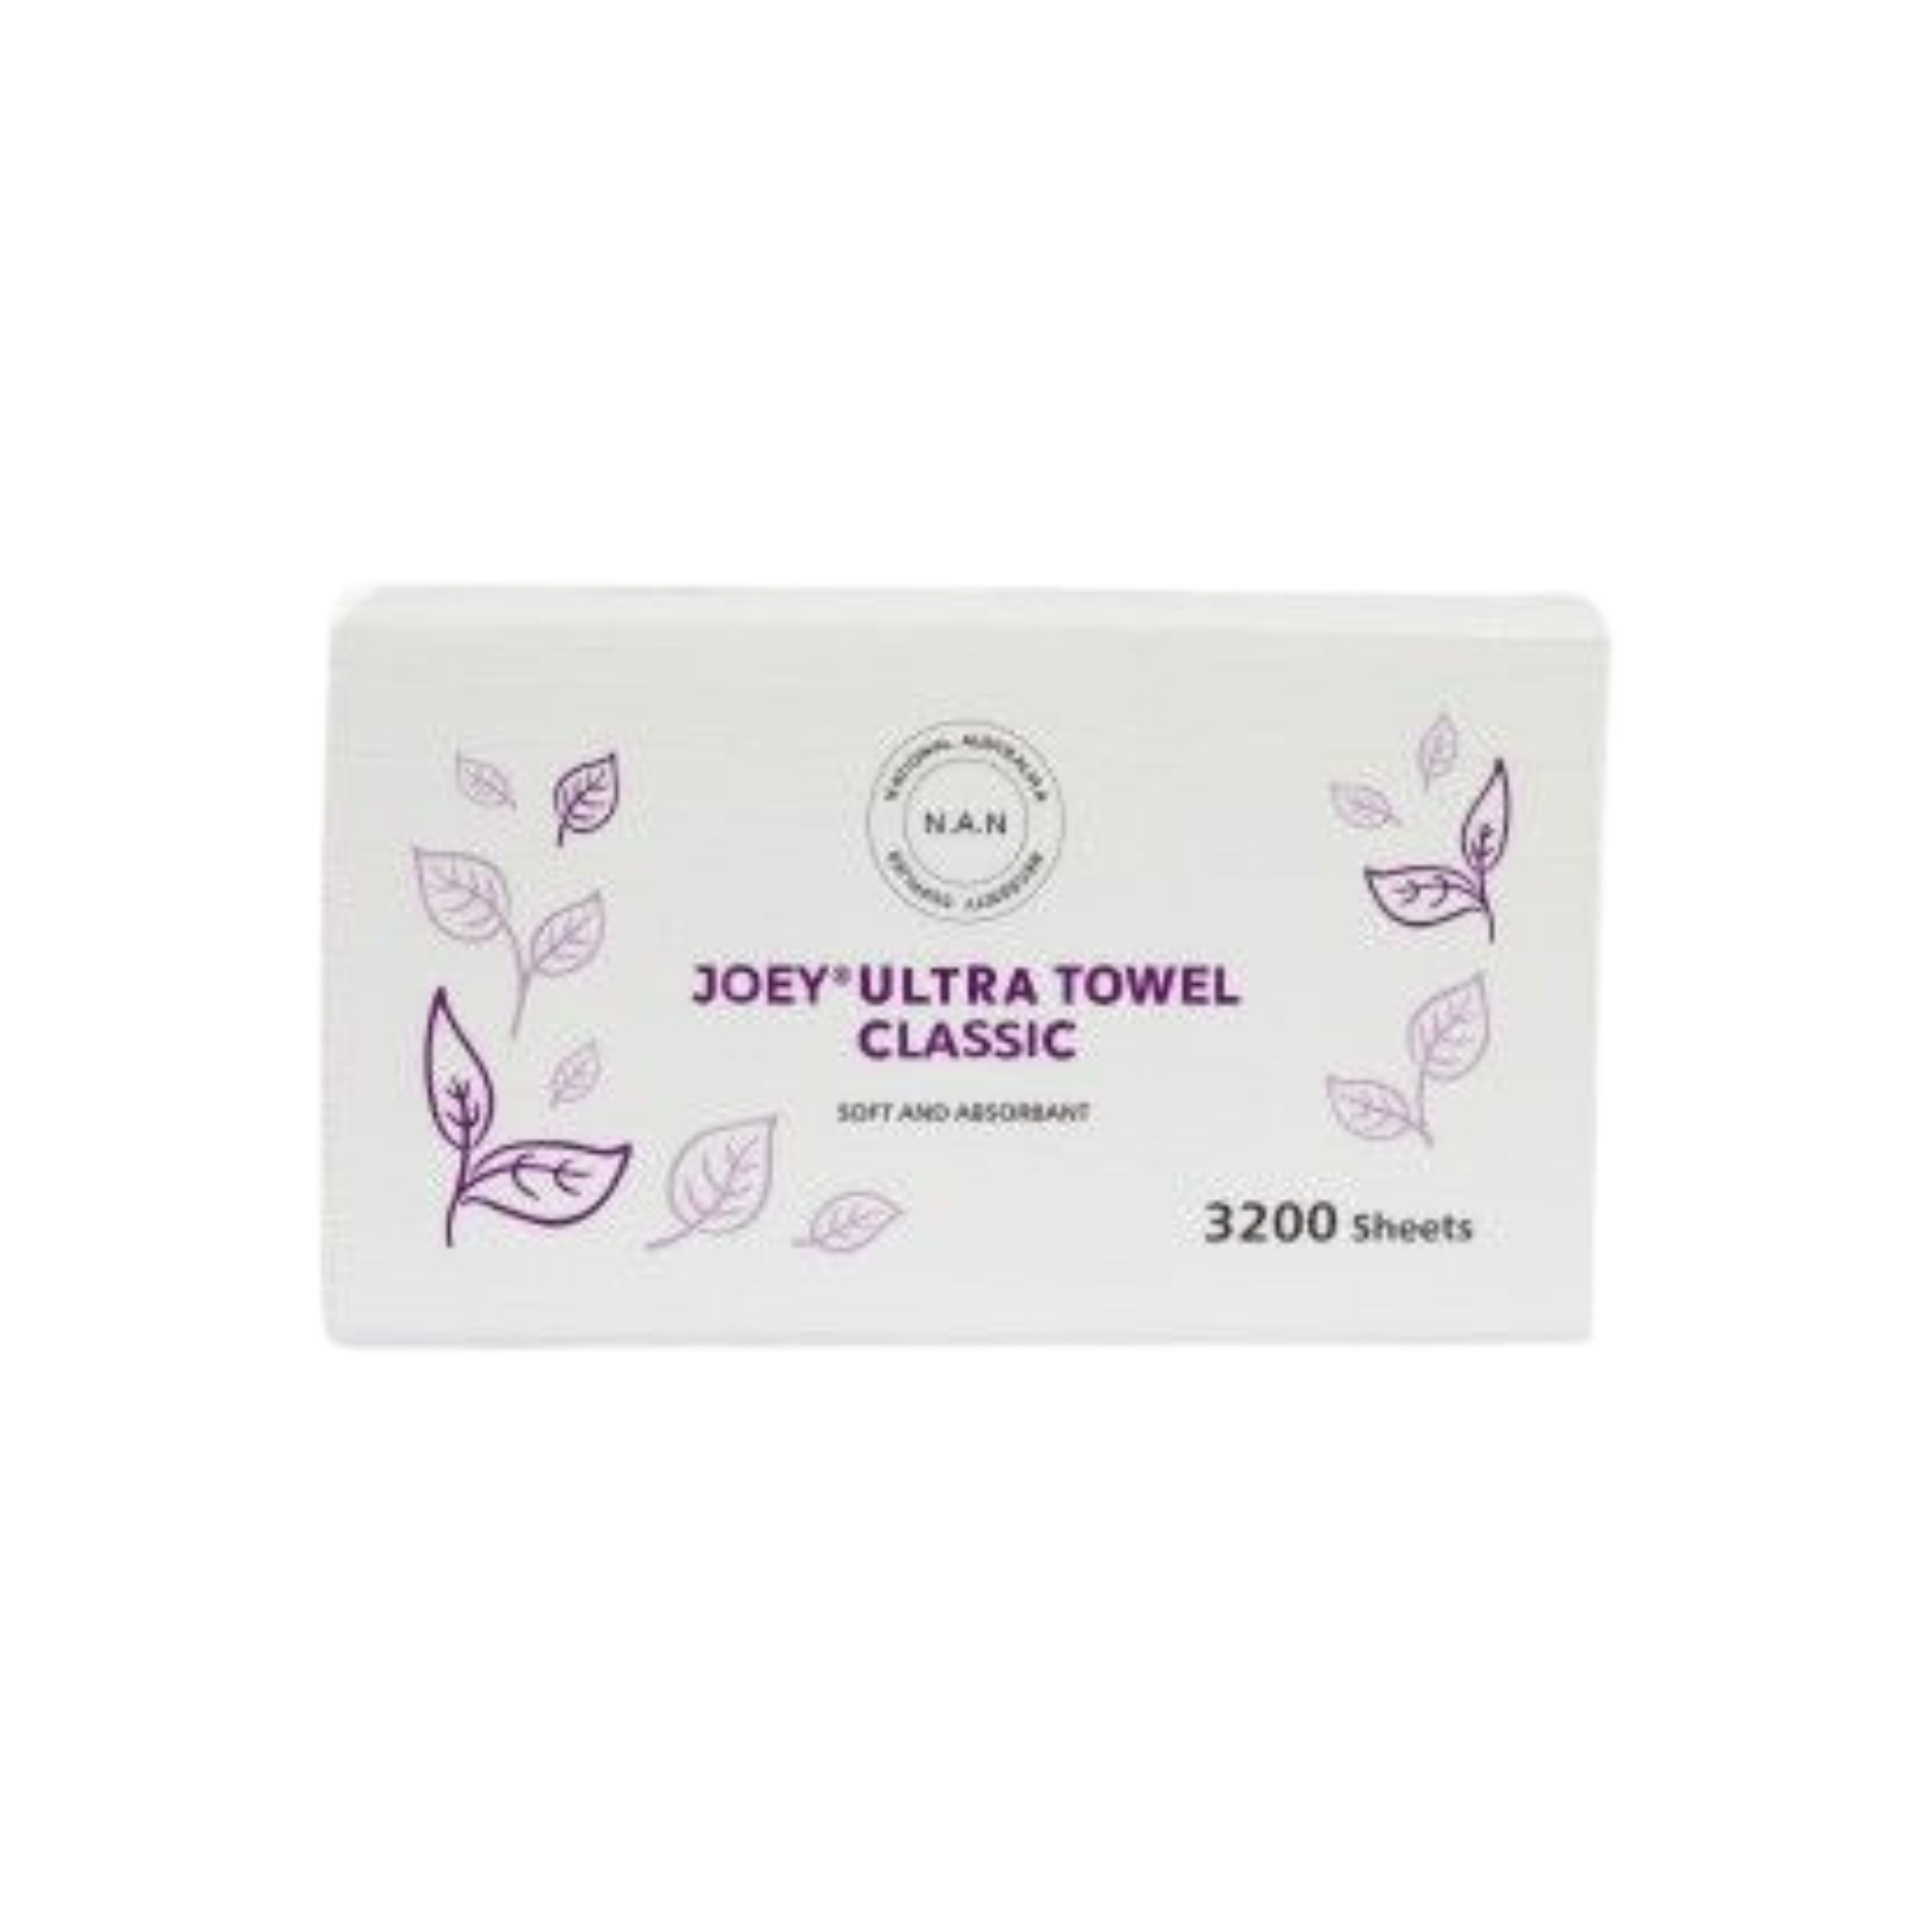 Joey Ultra Classic Towel 16x200's